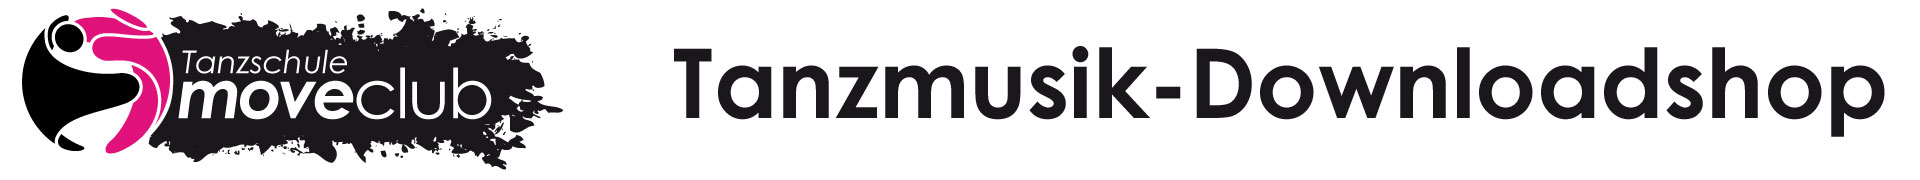 Tanzschule moveclub - Downloadshop Tanzmusik Logo